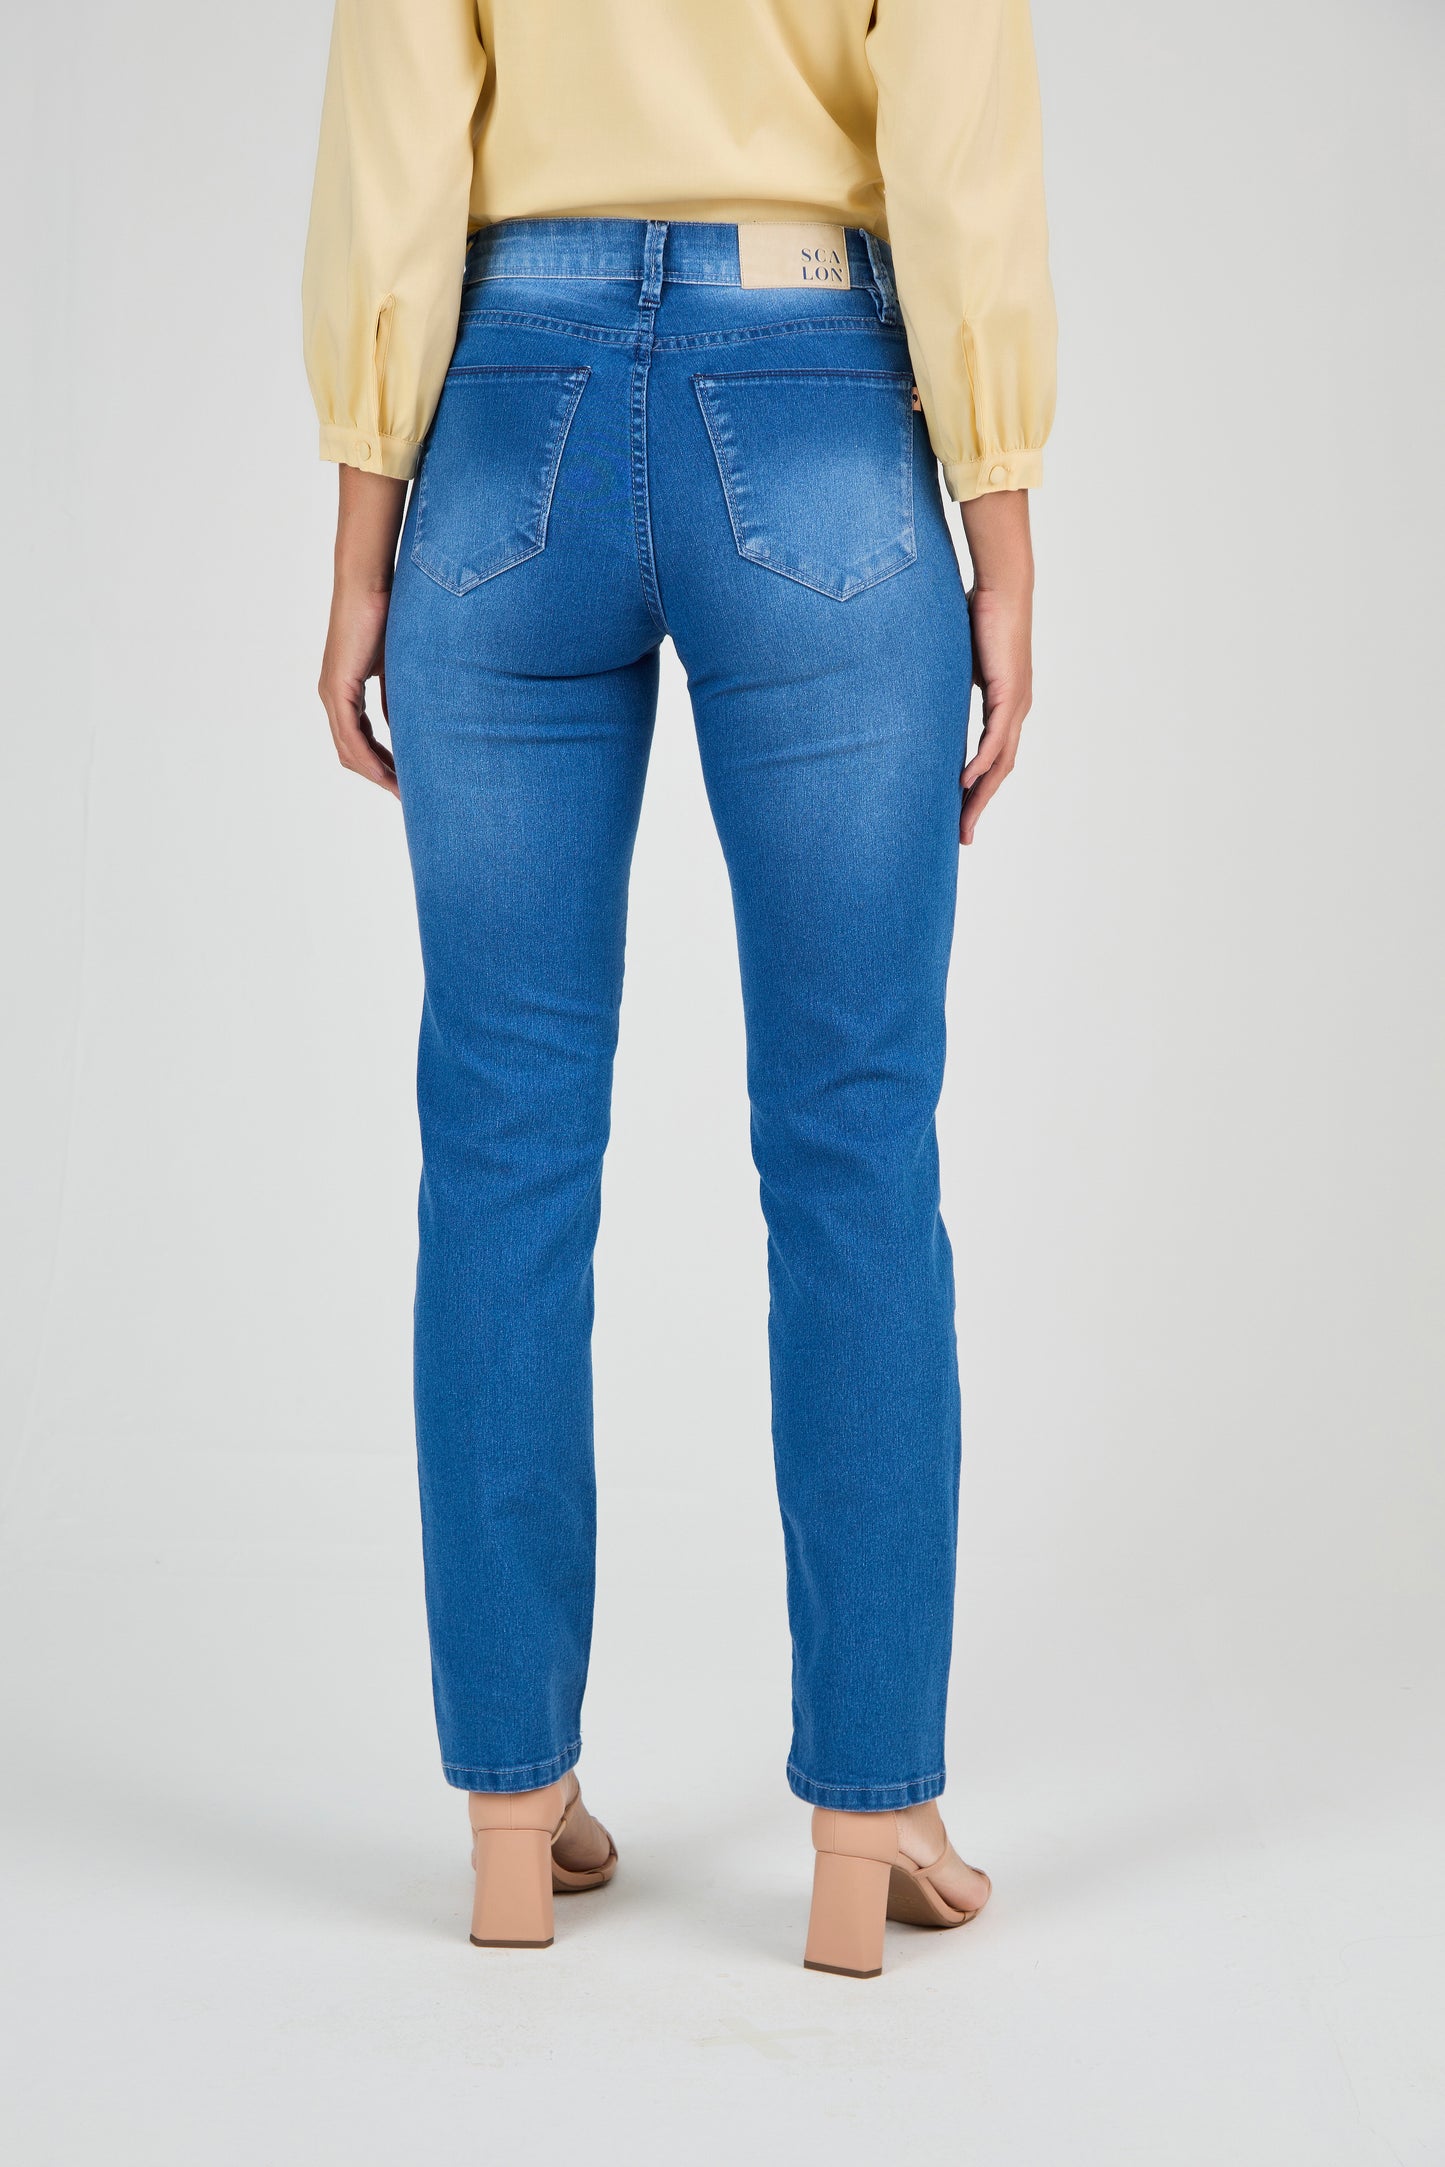 calça jeans reta cintura intermediria